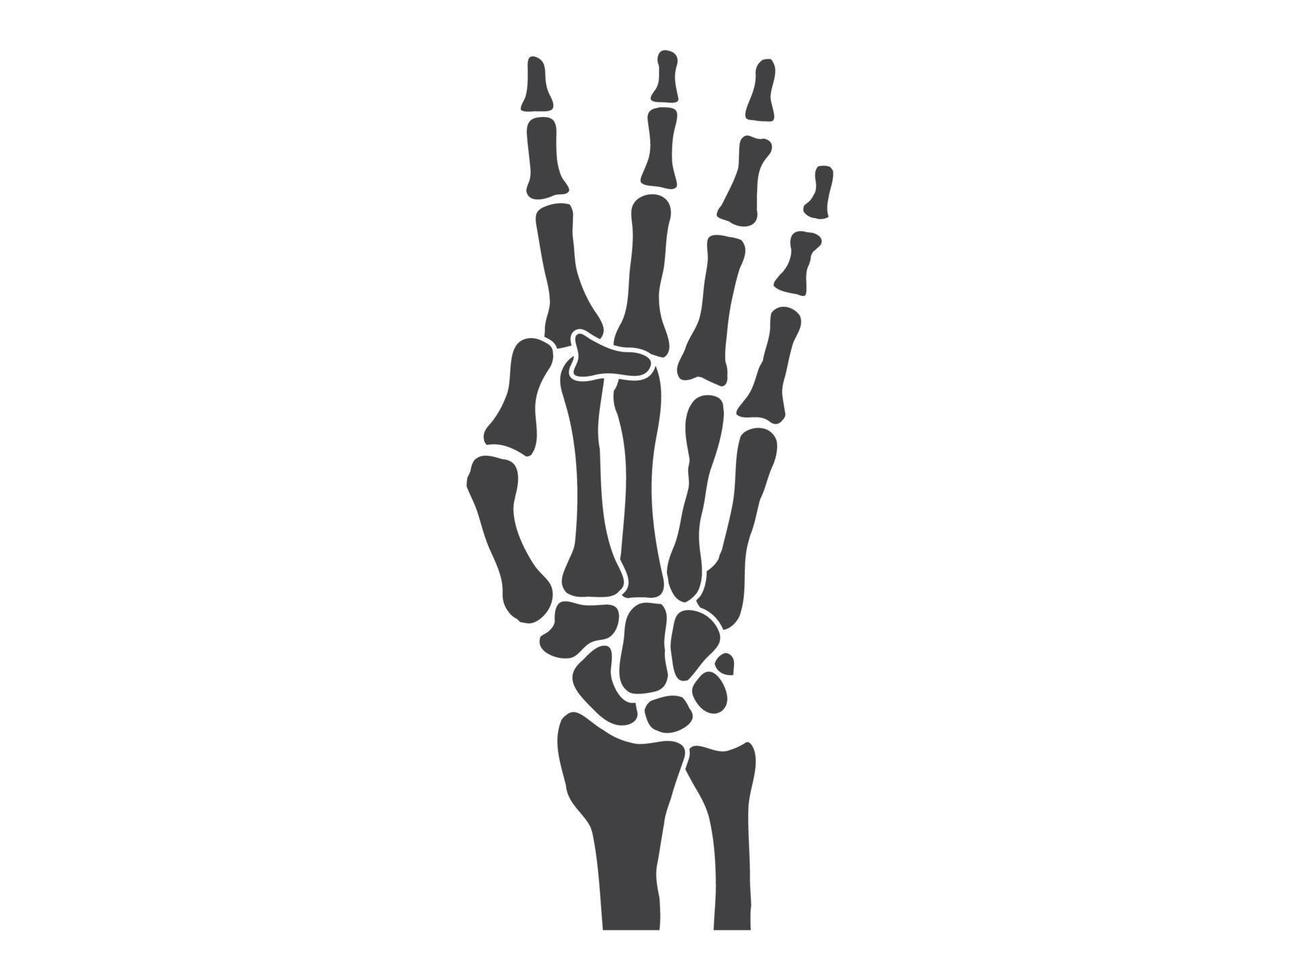 mano ossatura nero e bianca umano scheletro osso mani vettore